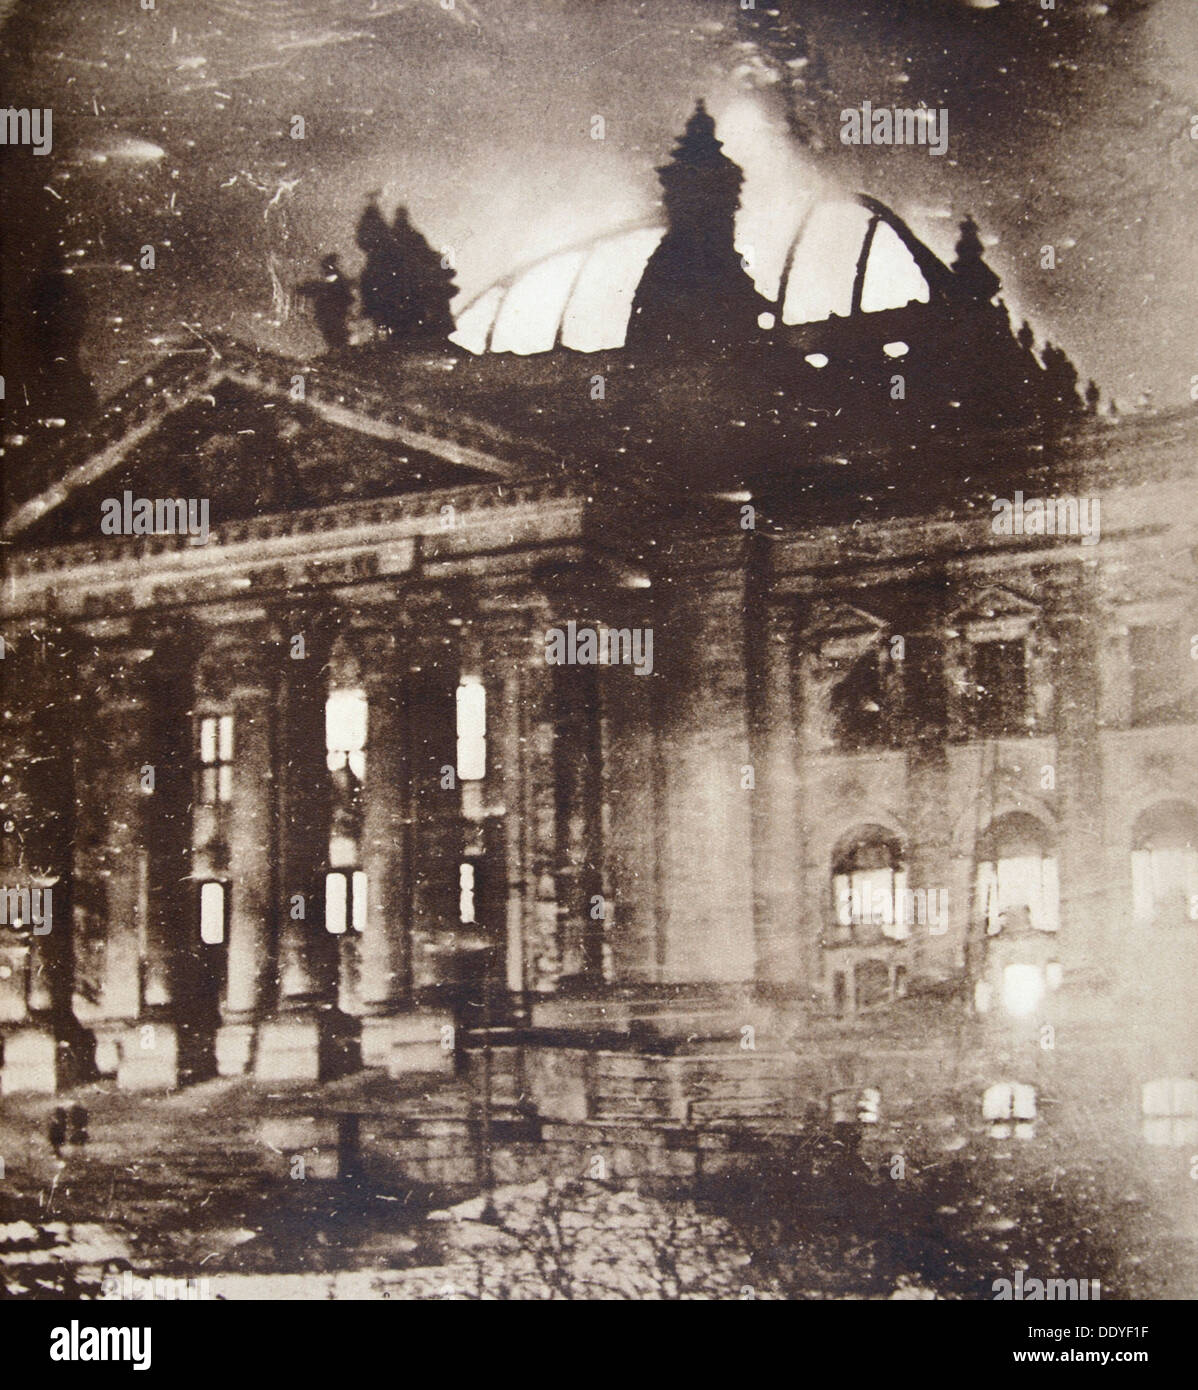 Le Reichstag en flammes, Berlin, Allemagne, 27 février 1933. Artiste : Inconnu Banque D'Images